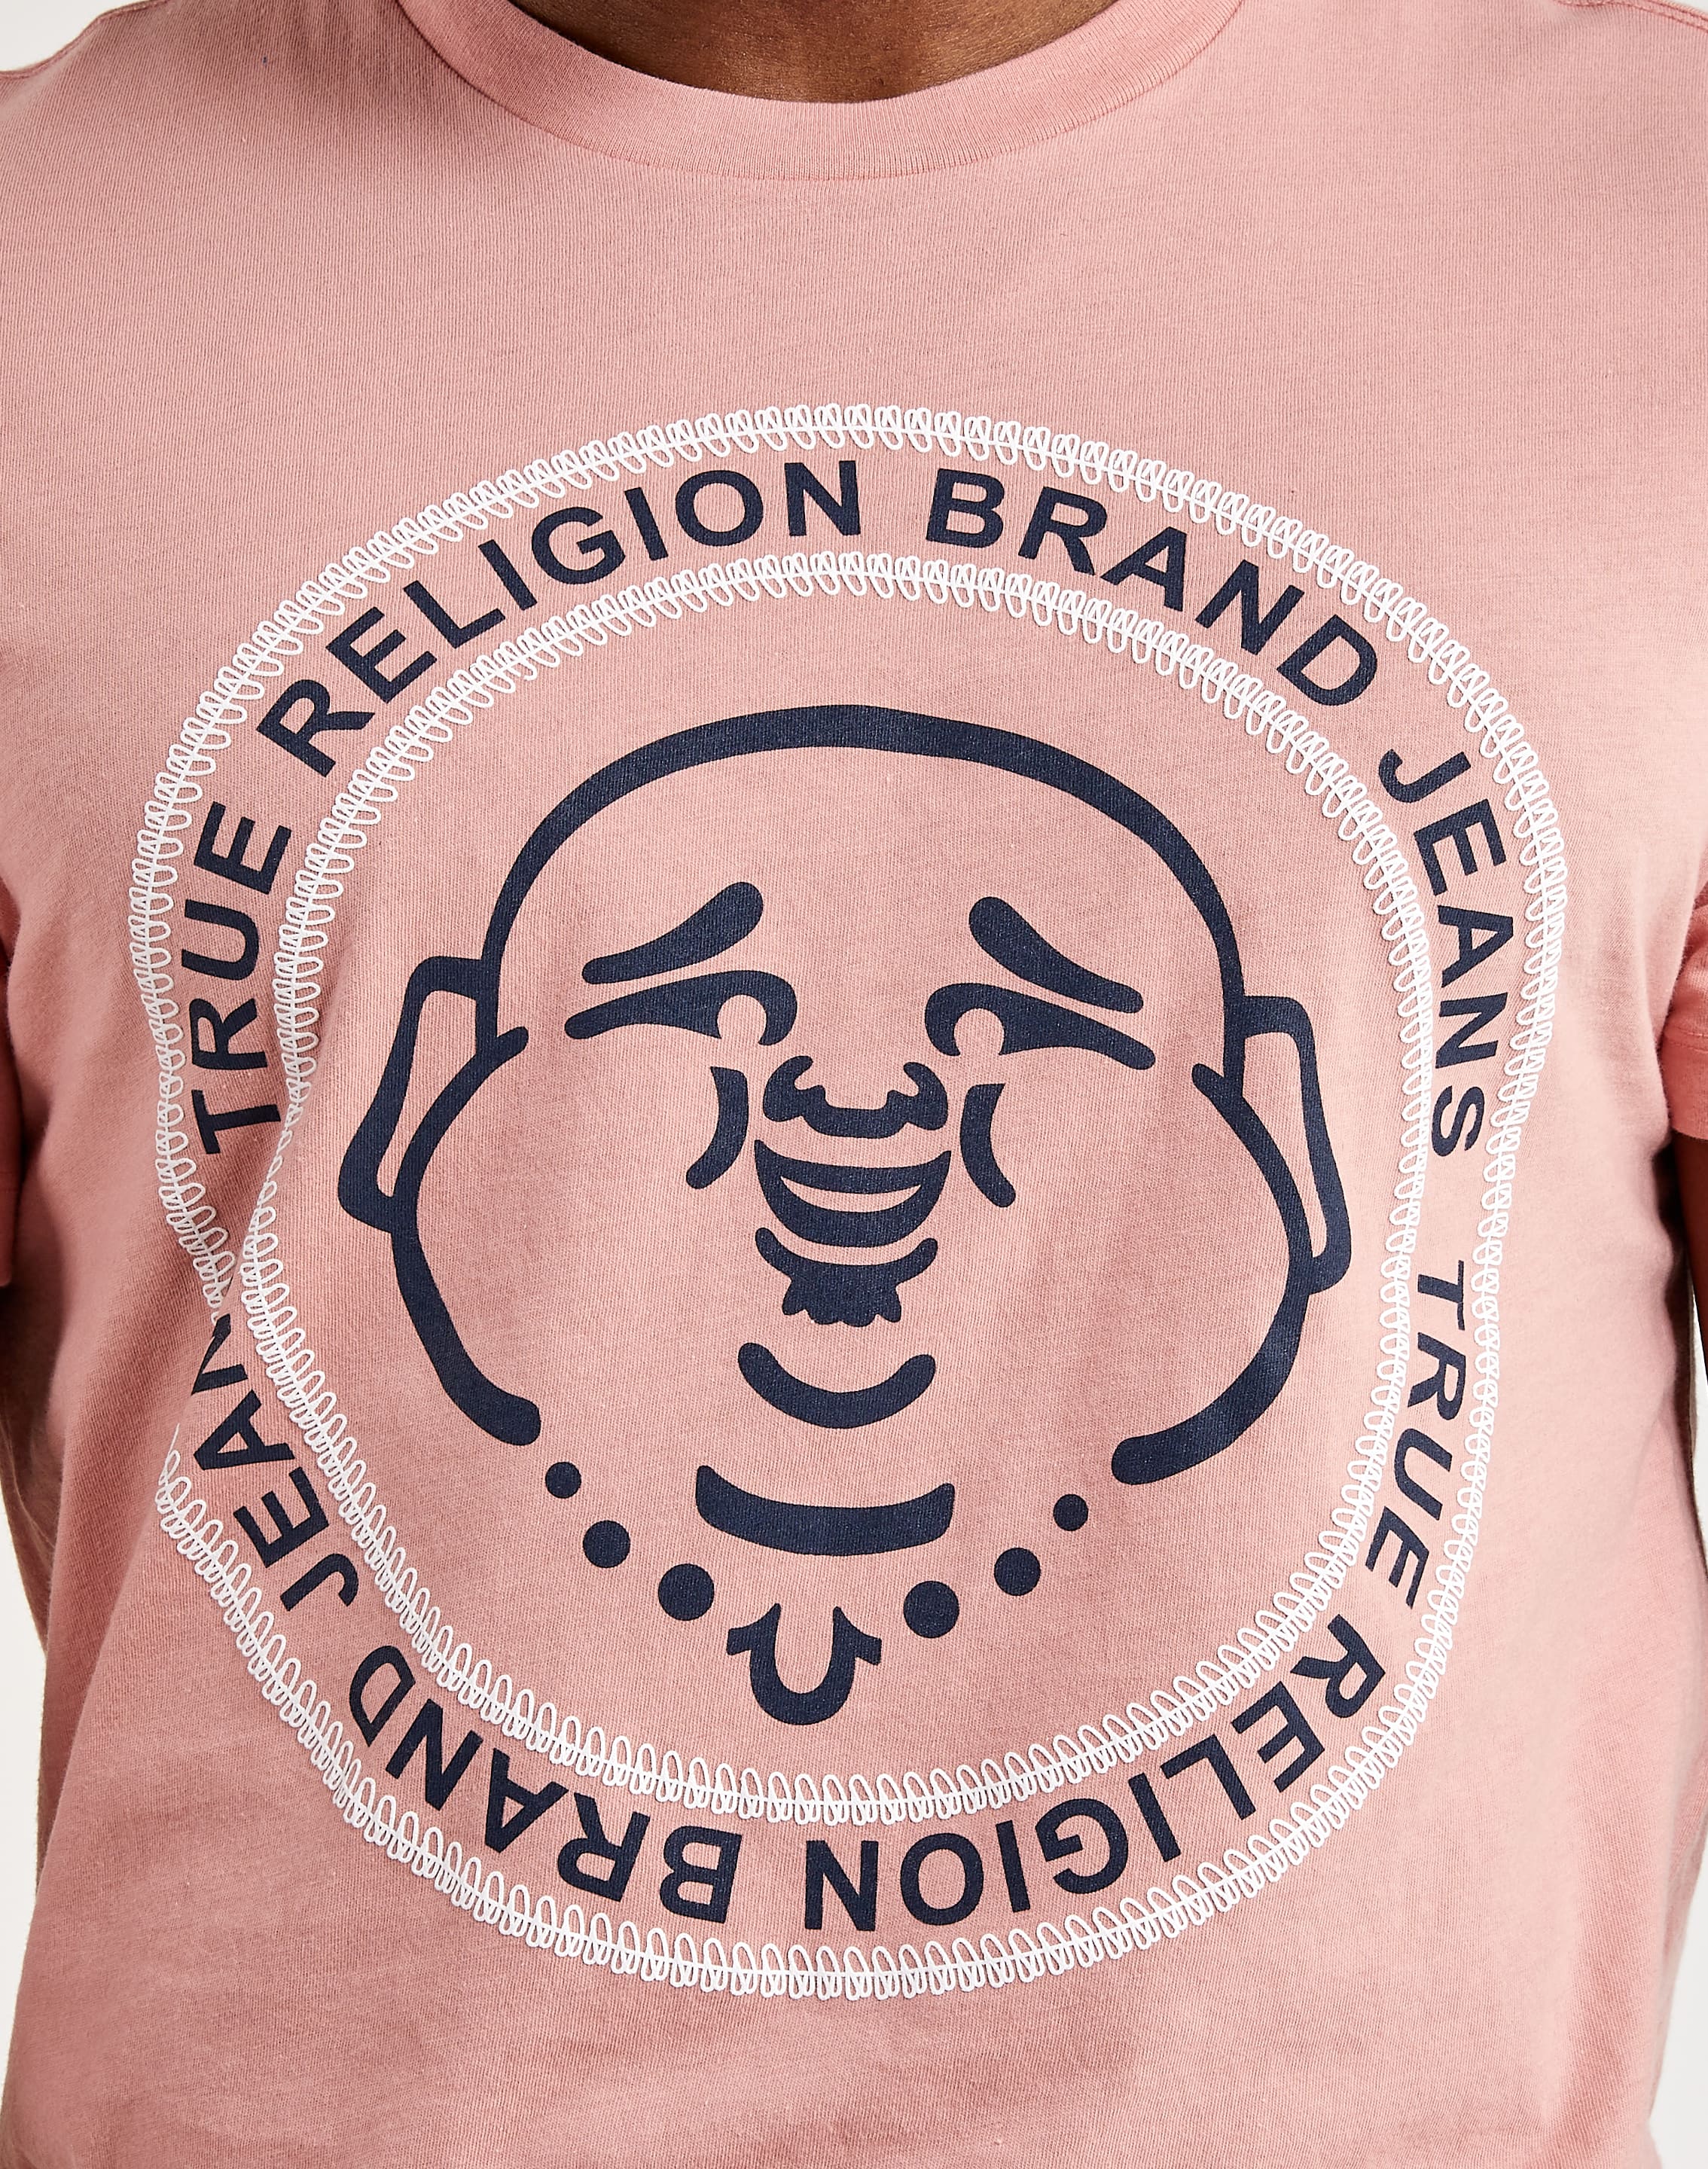 True Religion Original Buddha Brand Tee – DTLR